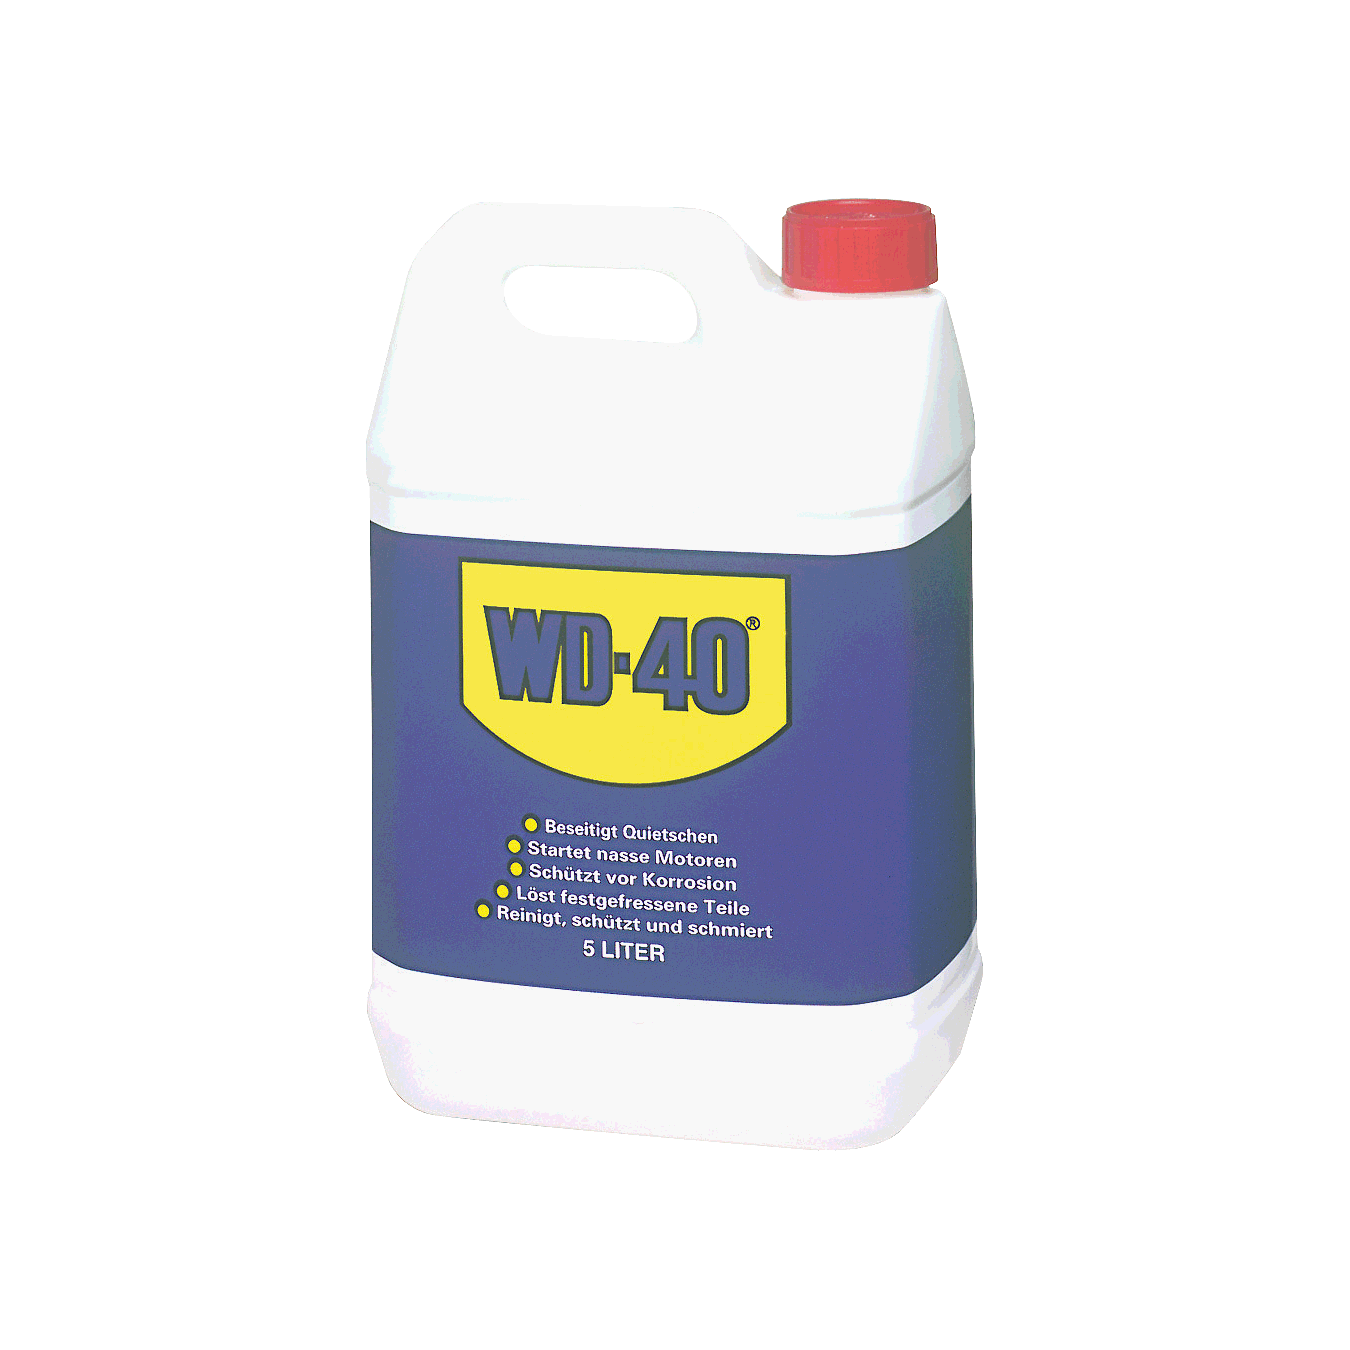 winkler shop - Multi-function oil, WD-40, 5l